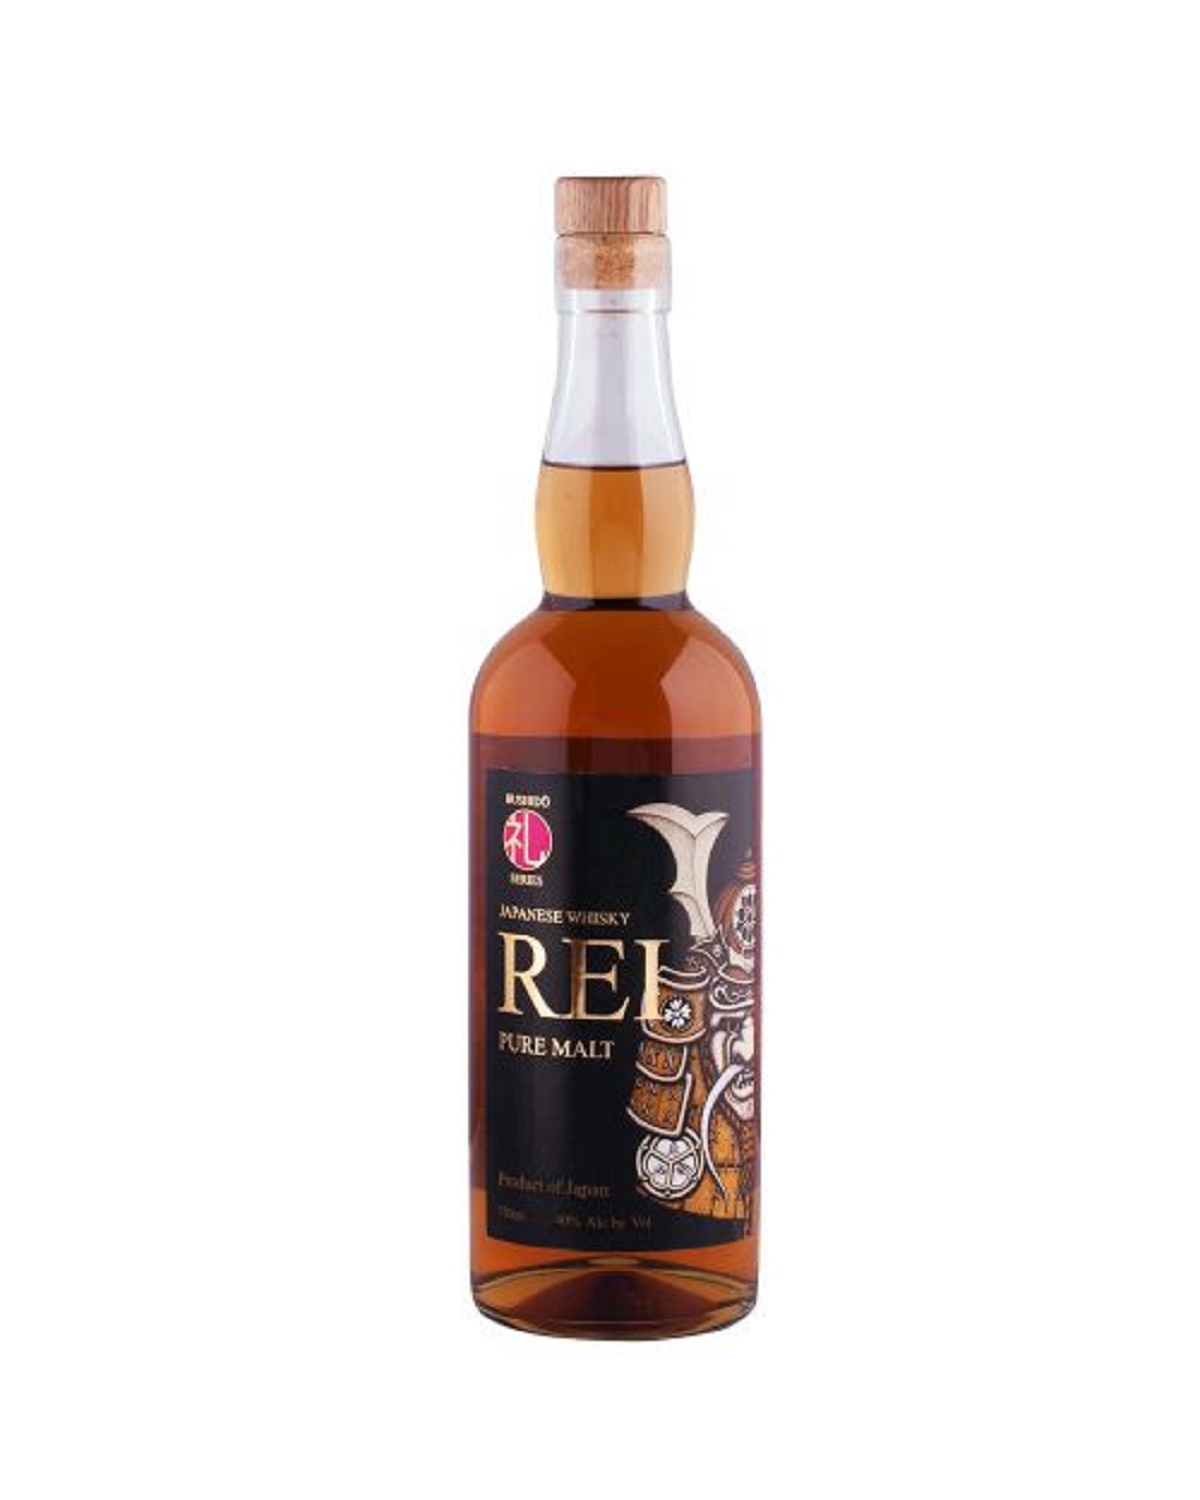 REI Pure Malt Japanese Whisky